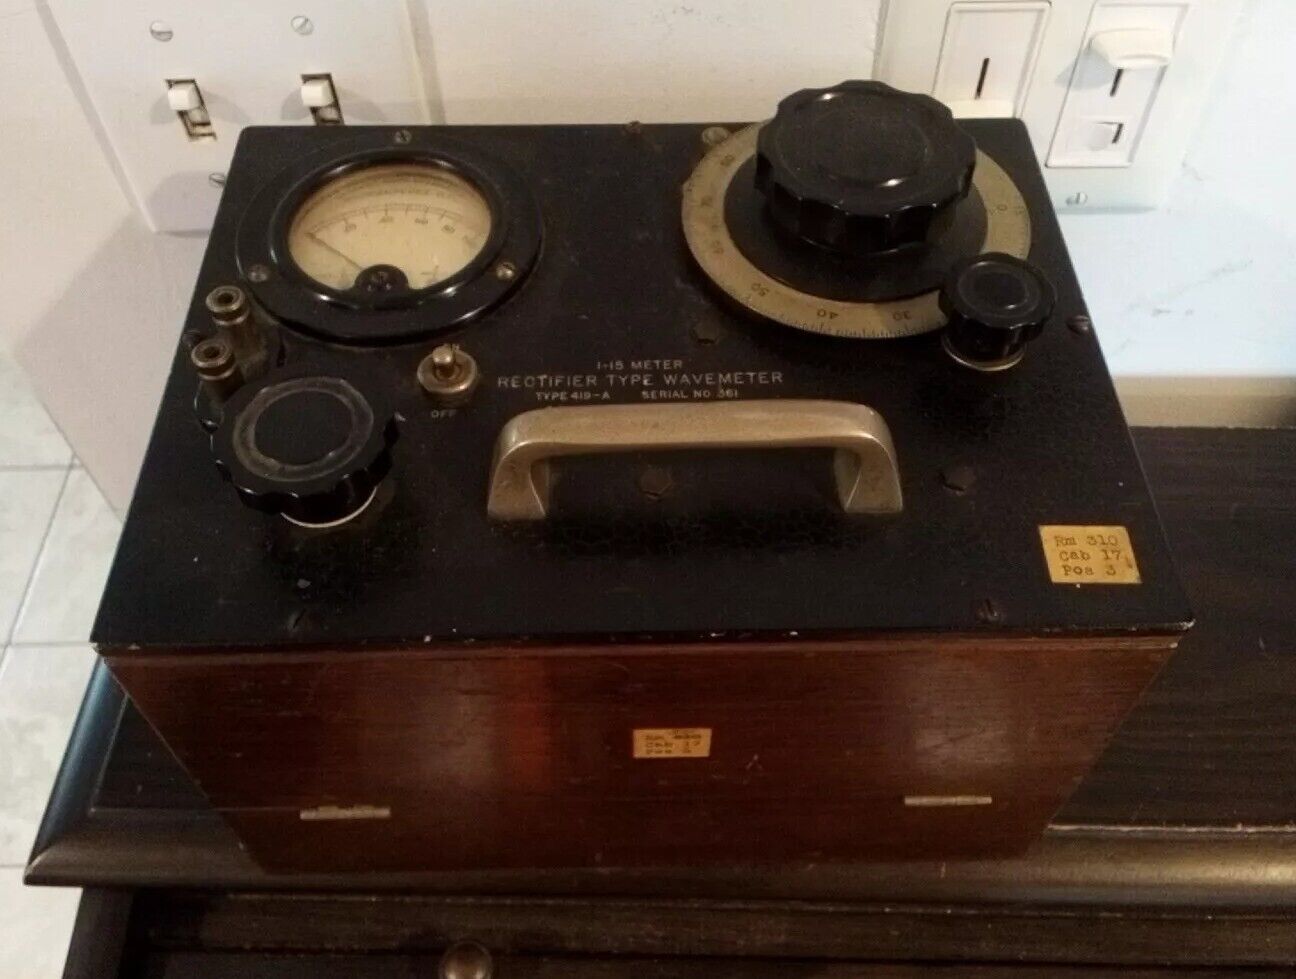 General Radio Co. Rectifier Type Wavemeter Type 419-A Vintage